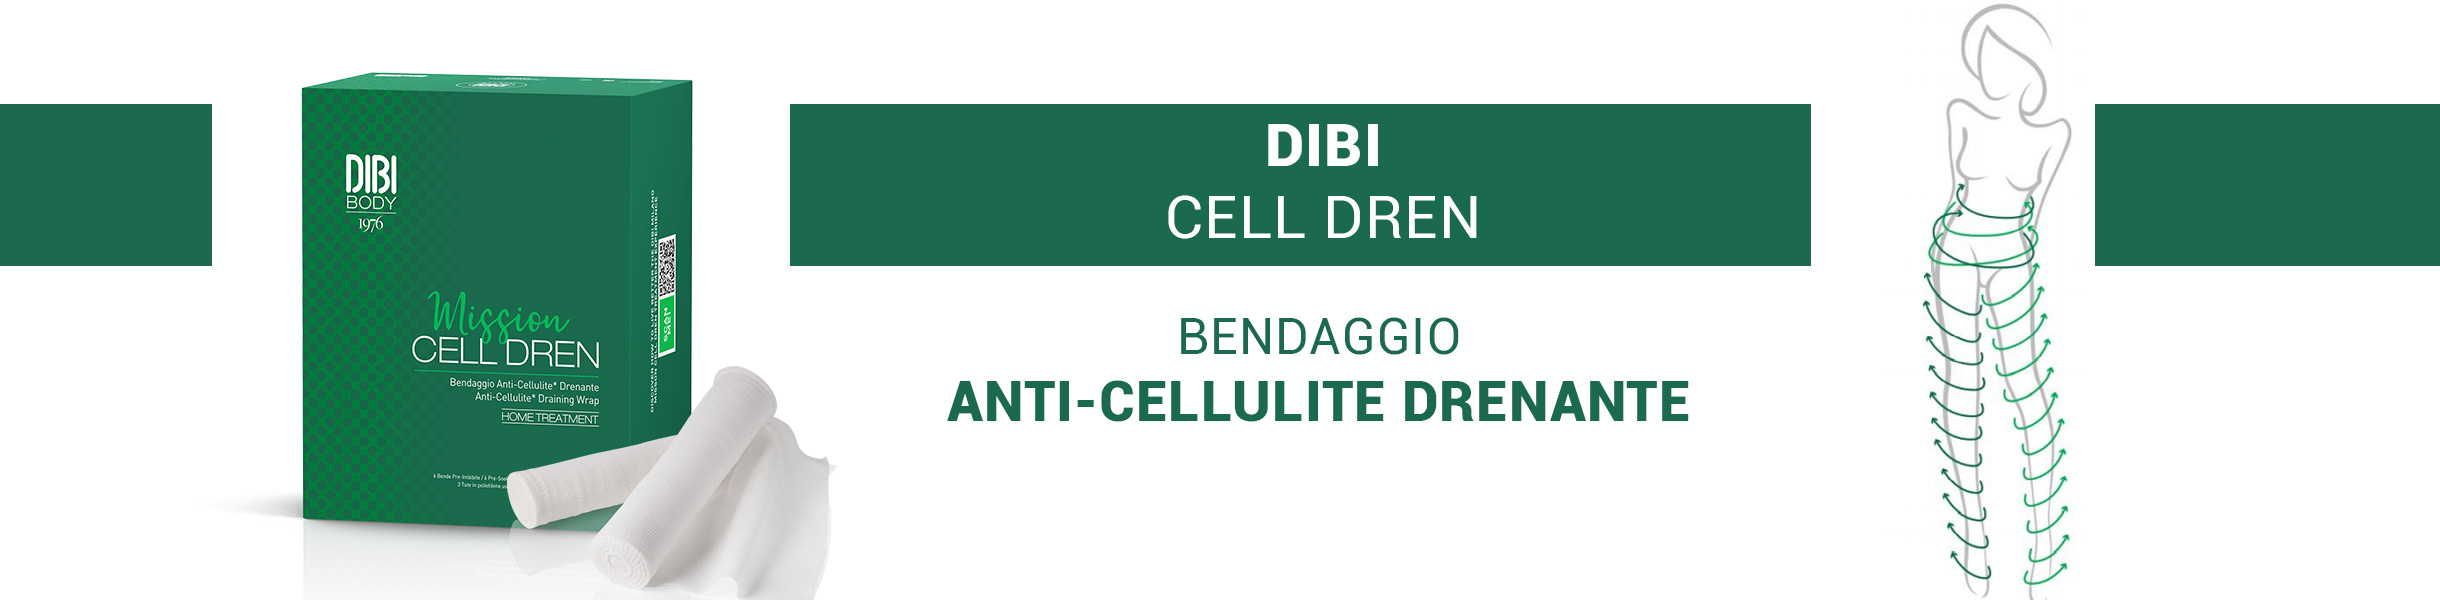 CELL DREN - BENDAGGIO ANTICELLULITE DRENANTE